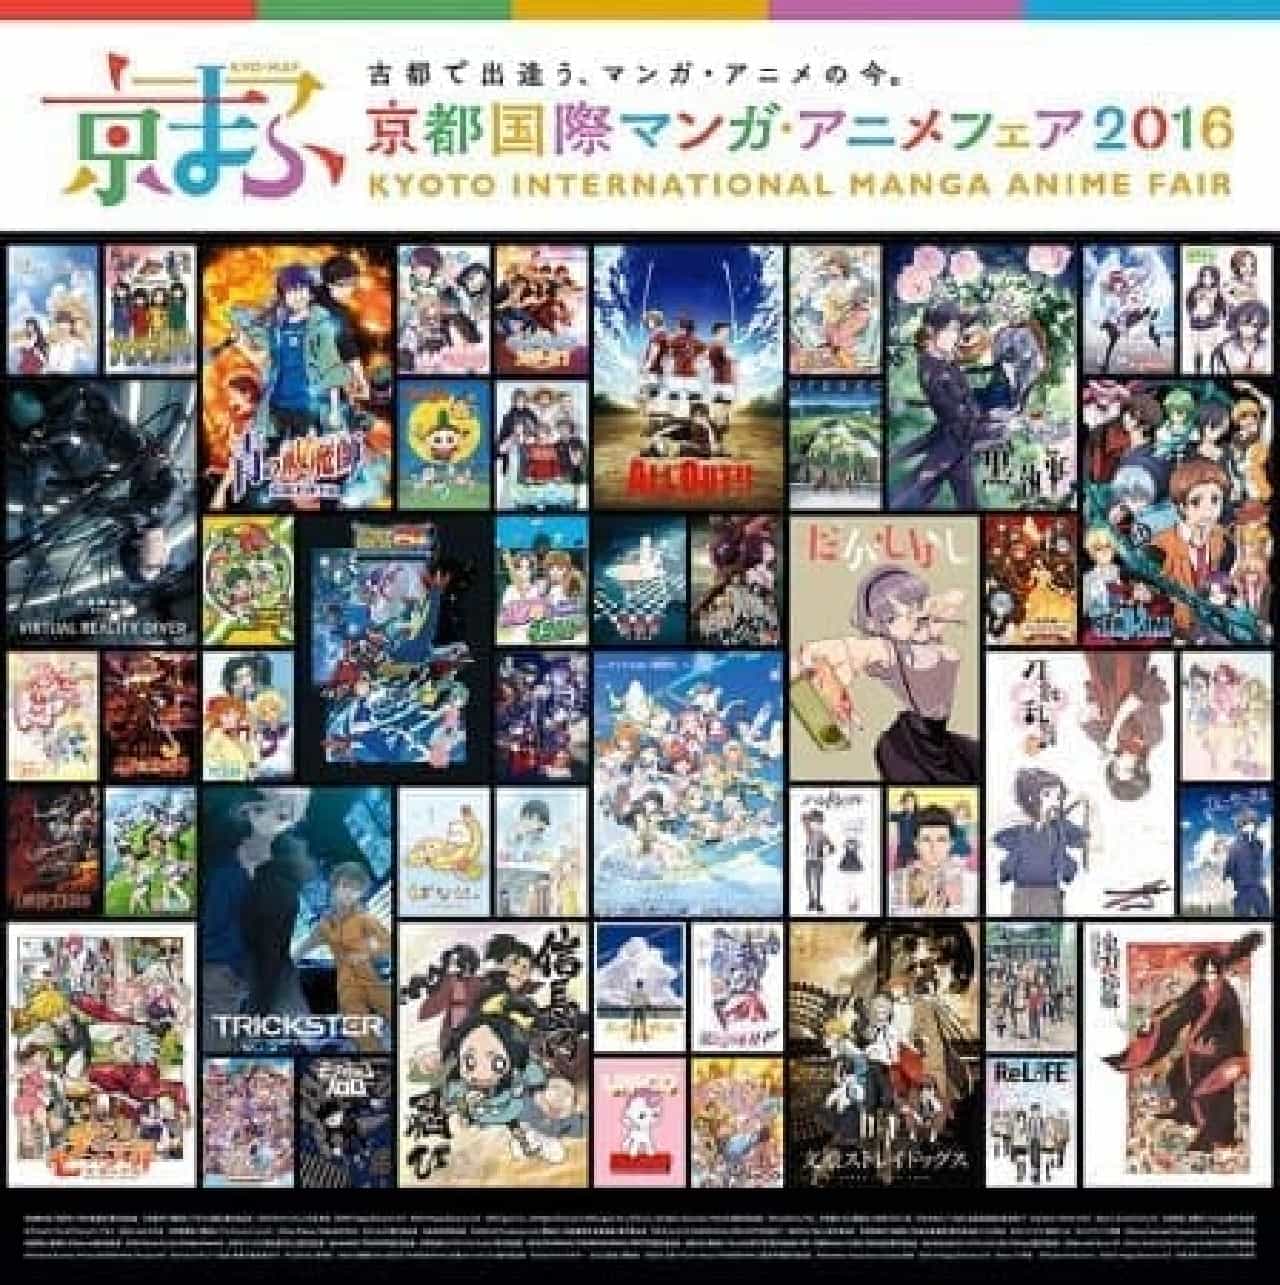 Kyoto International Manga Anime Fair 2016